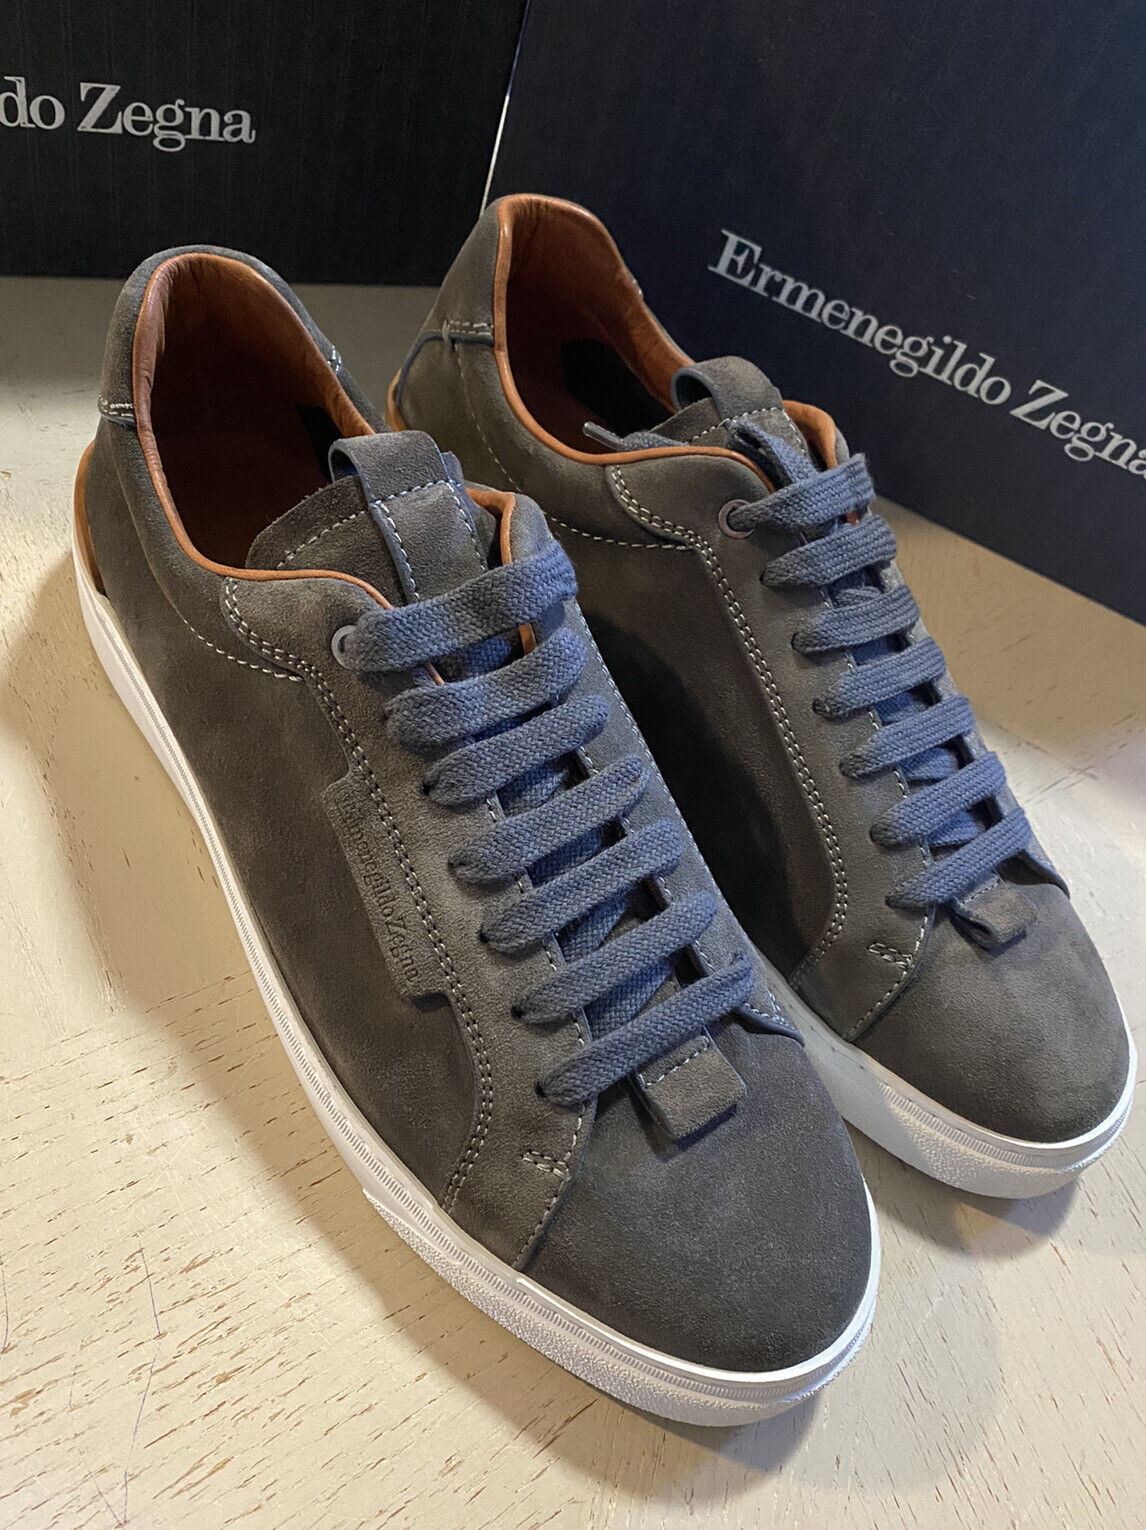 New $495 Ermenegildo Zegna Suede Sneakers Shoes DK Gray 10.5 US Italy